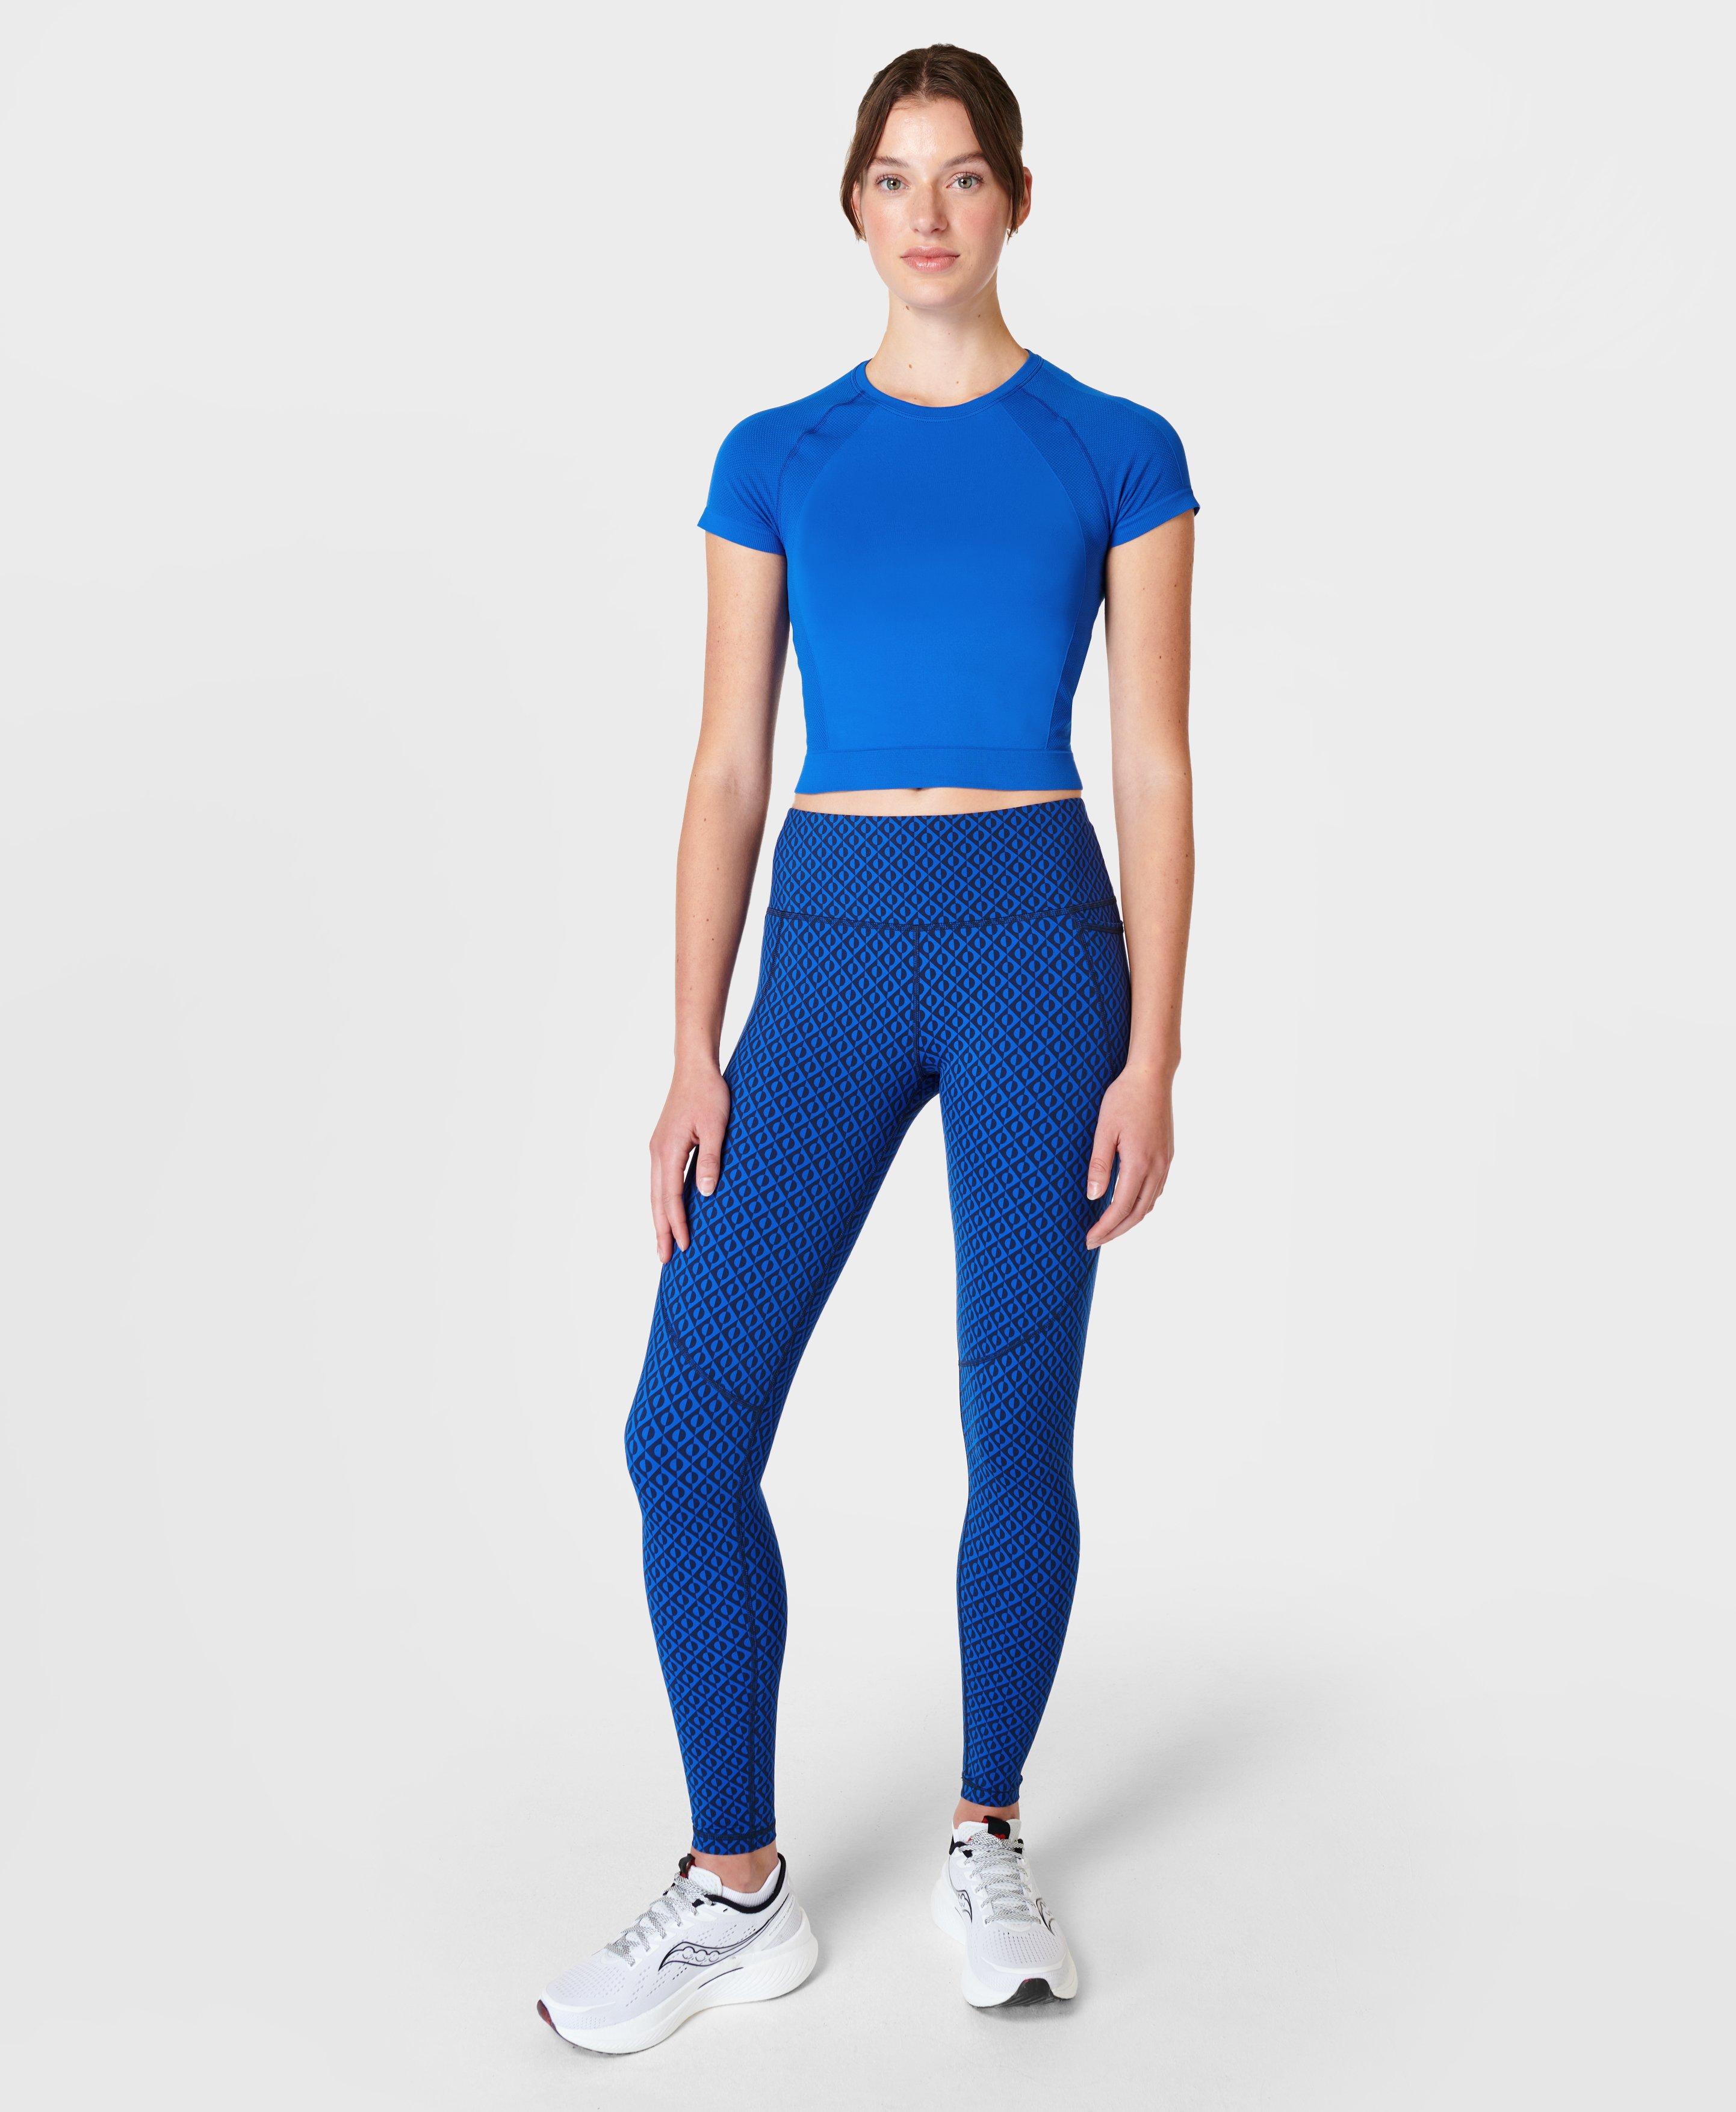 Power Pro Workout Leggings - Blue Virtual Landscape Print, Women's Leggings